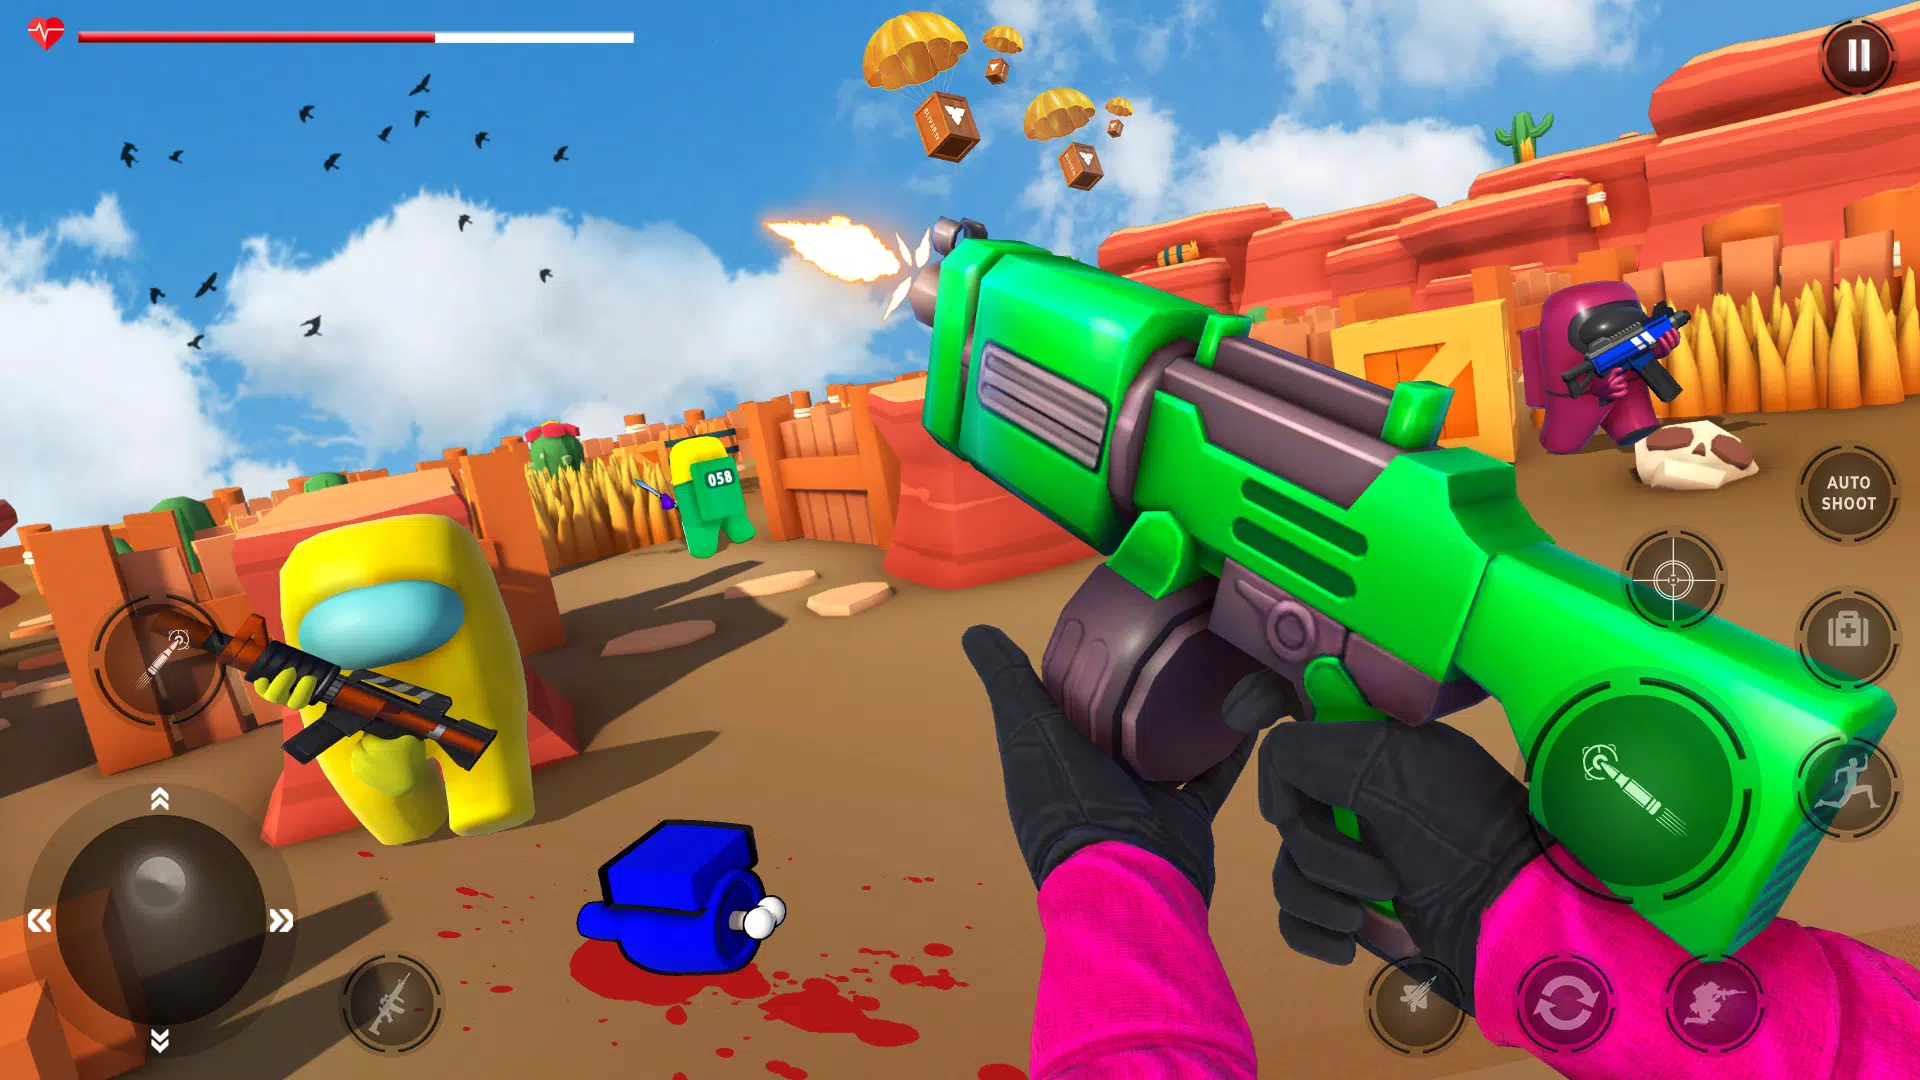 Kill Shot: Famoso jogo de tiro para Android recebe novas armas e